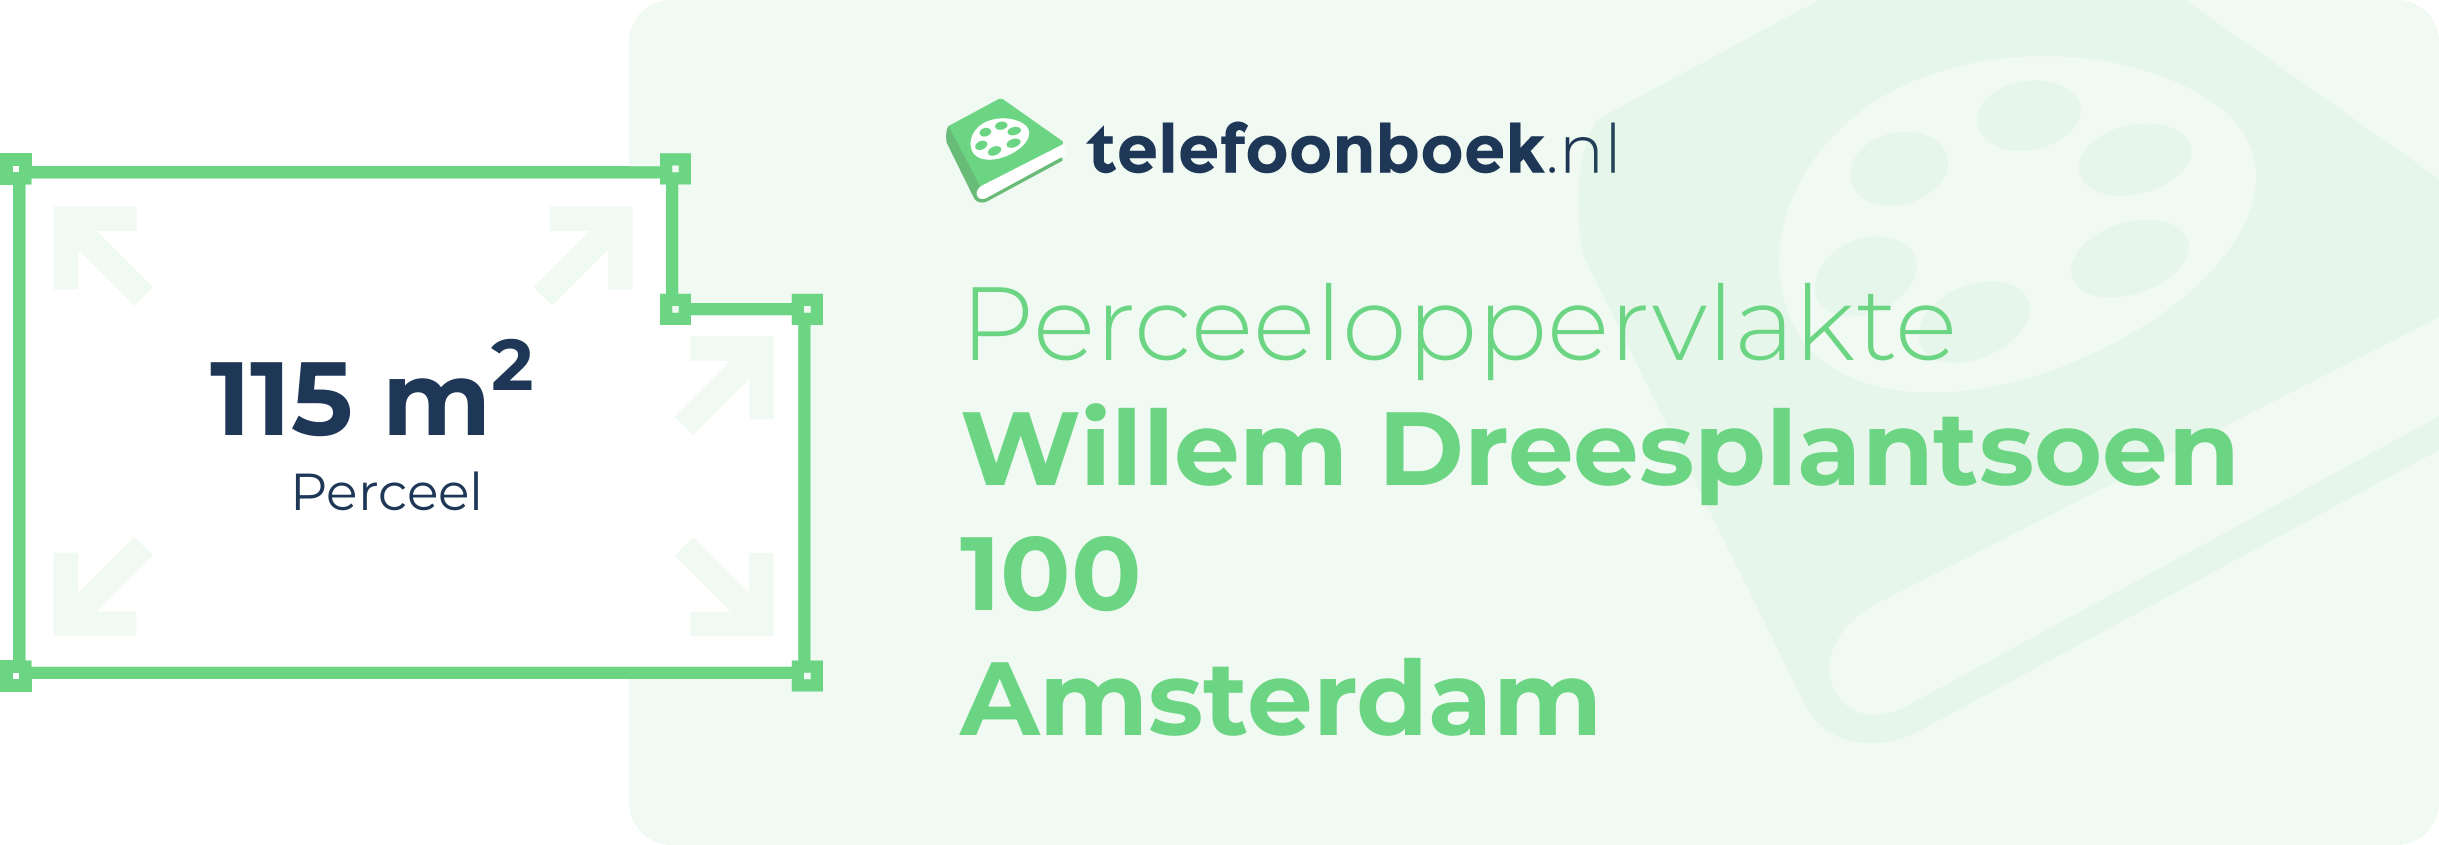 Perceeloppervlakte Willem Dreesplantsoen 100 Amsterdam